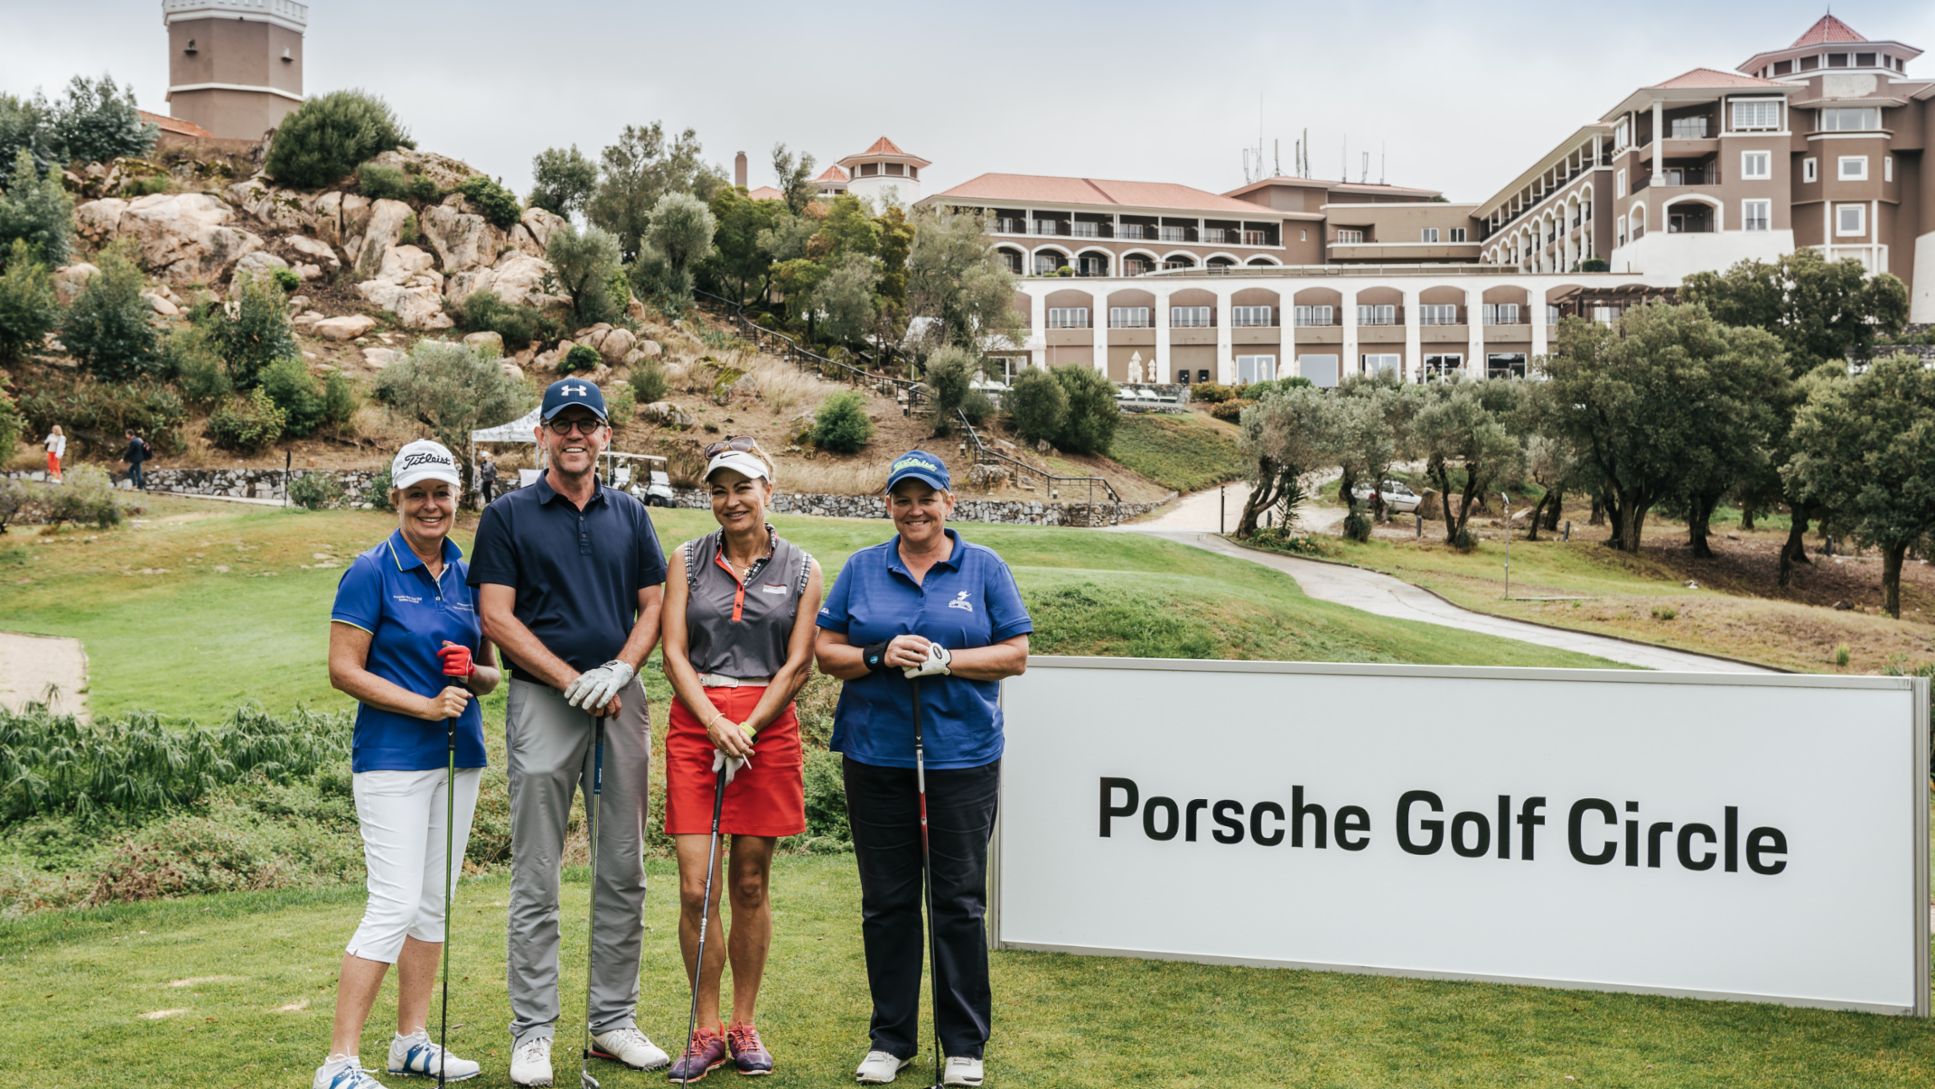 Porsche Golf Circle "Founding Member Event": Penha Longa Resort